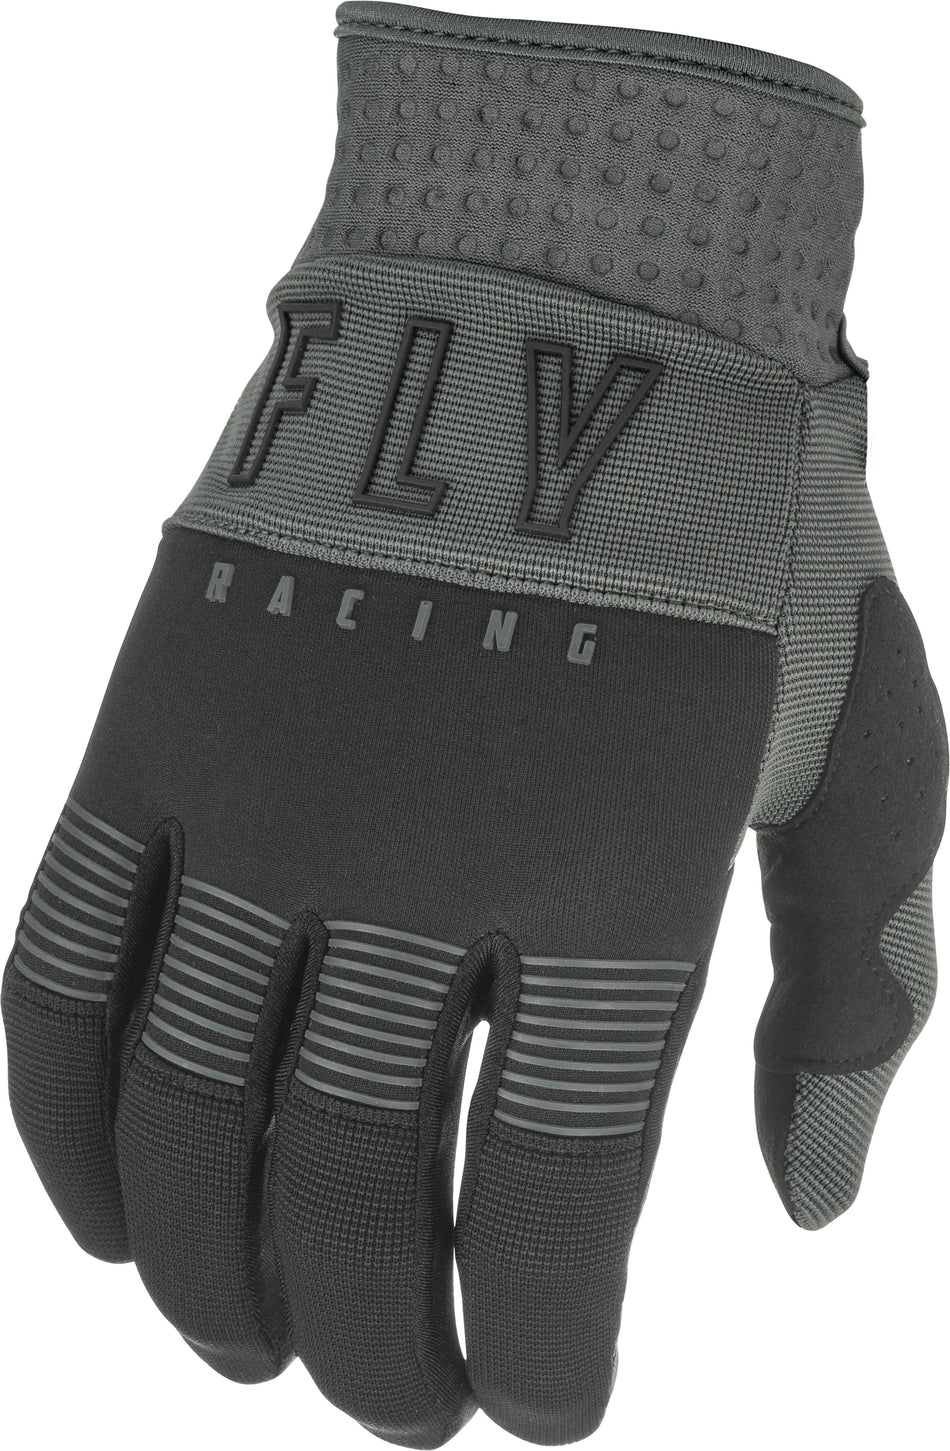 FLY RACING F-16 Gloves Black/Grey Sz 13 374-91013